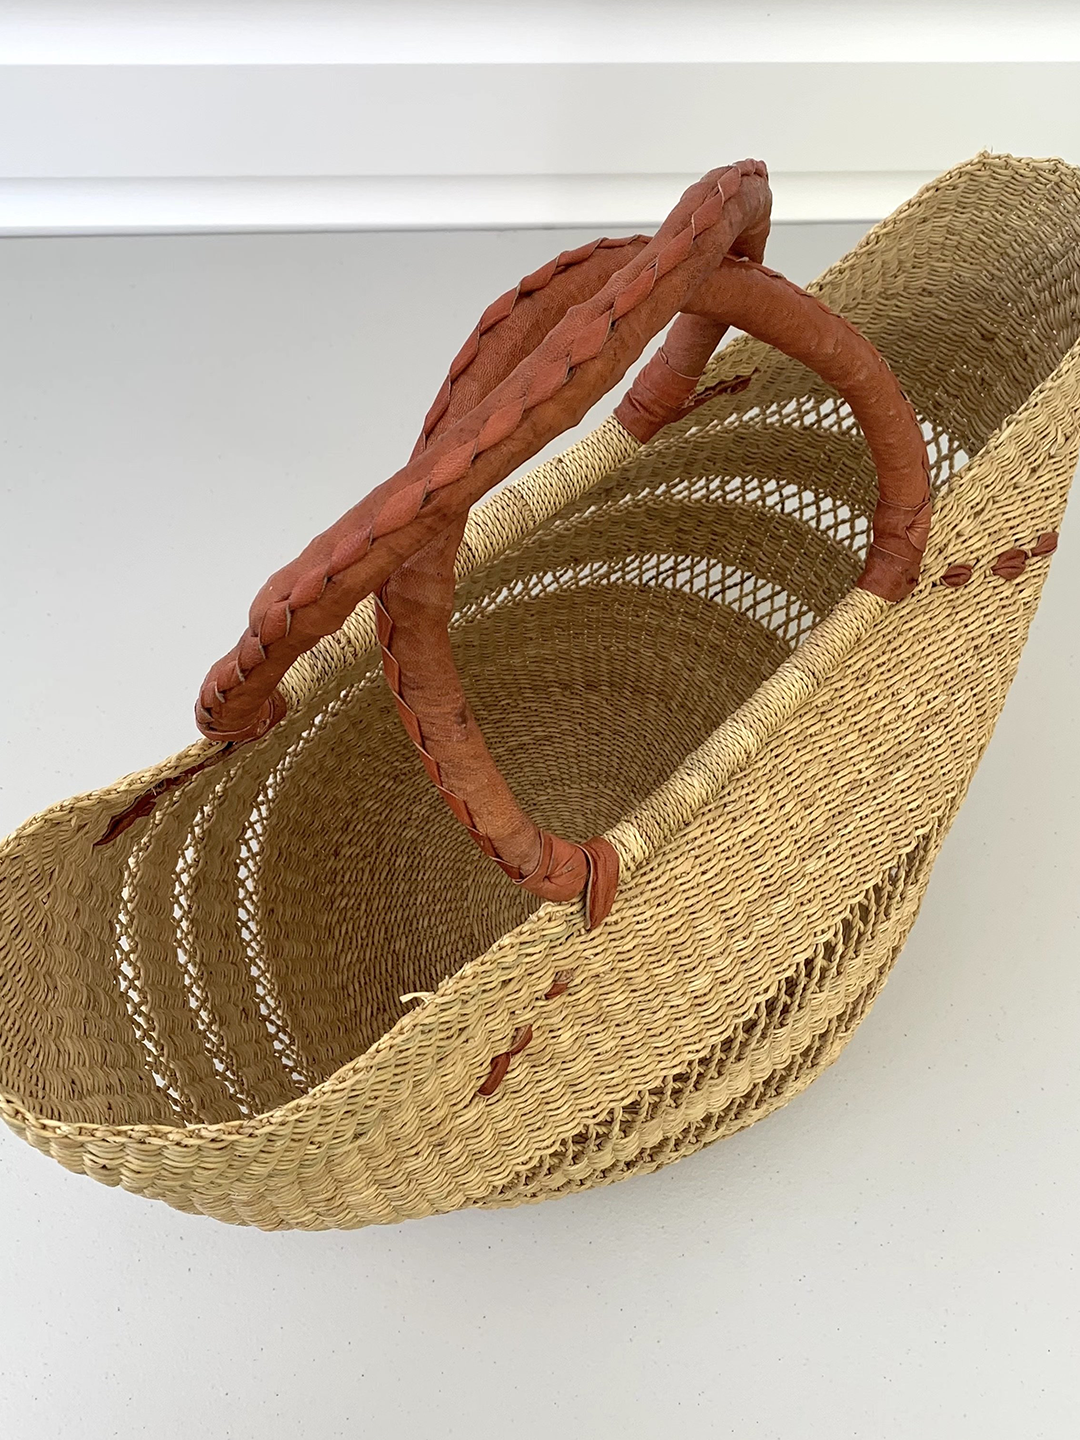 Sorrento Basket - Tan open weave with Pom Poms